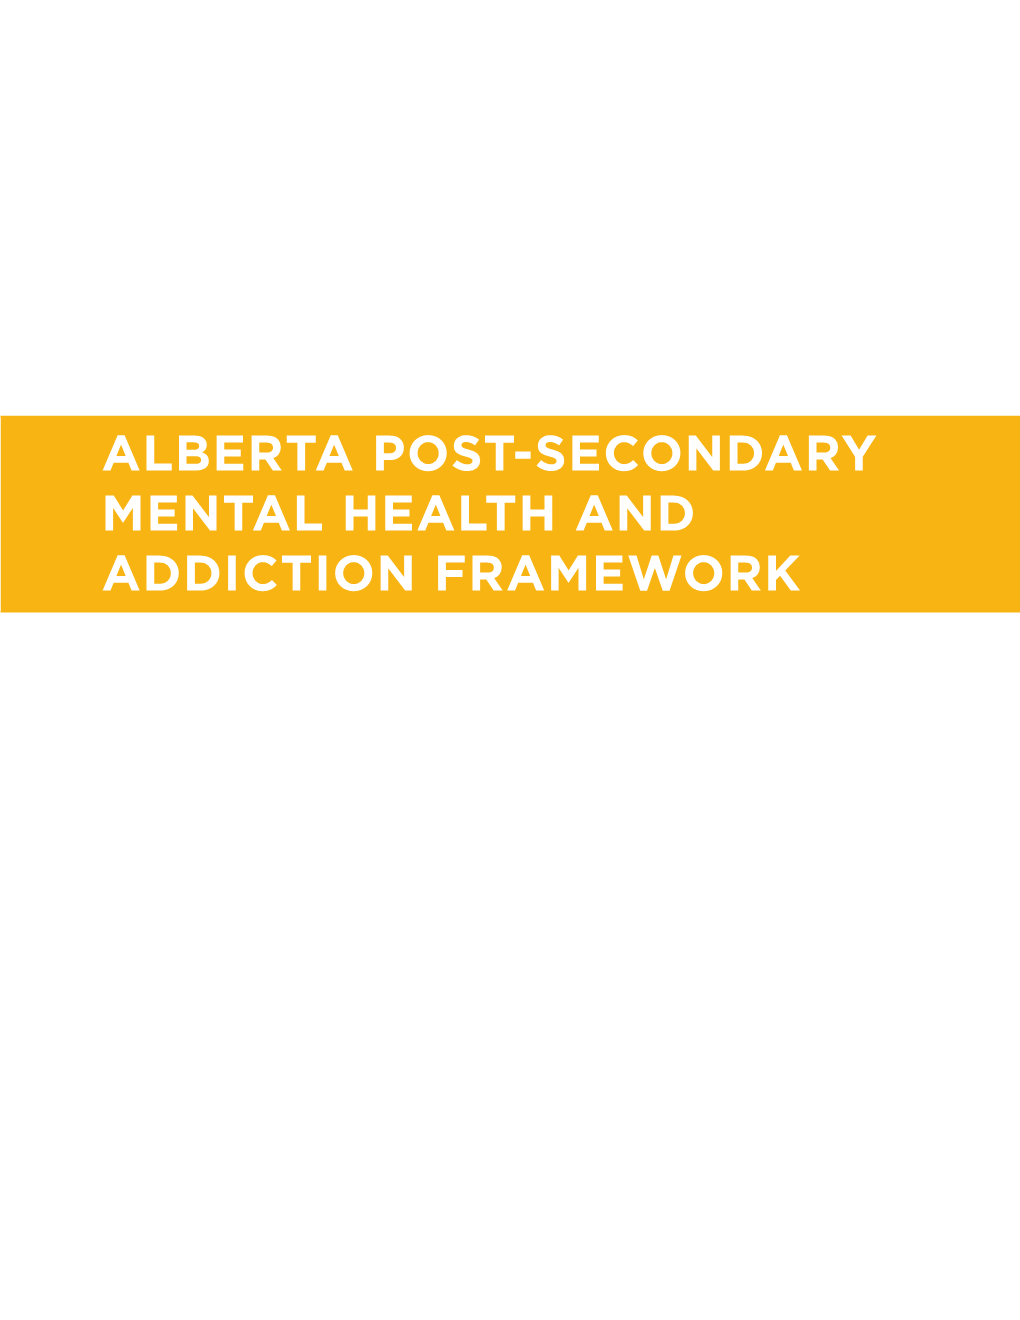 Alberta Post-Secondary Mental Health and Addiction Framework Acknowledgements